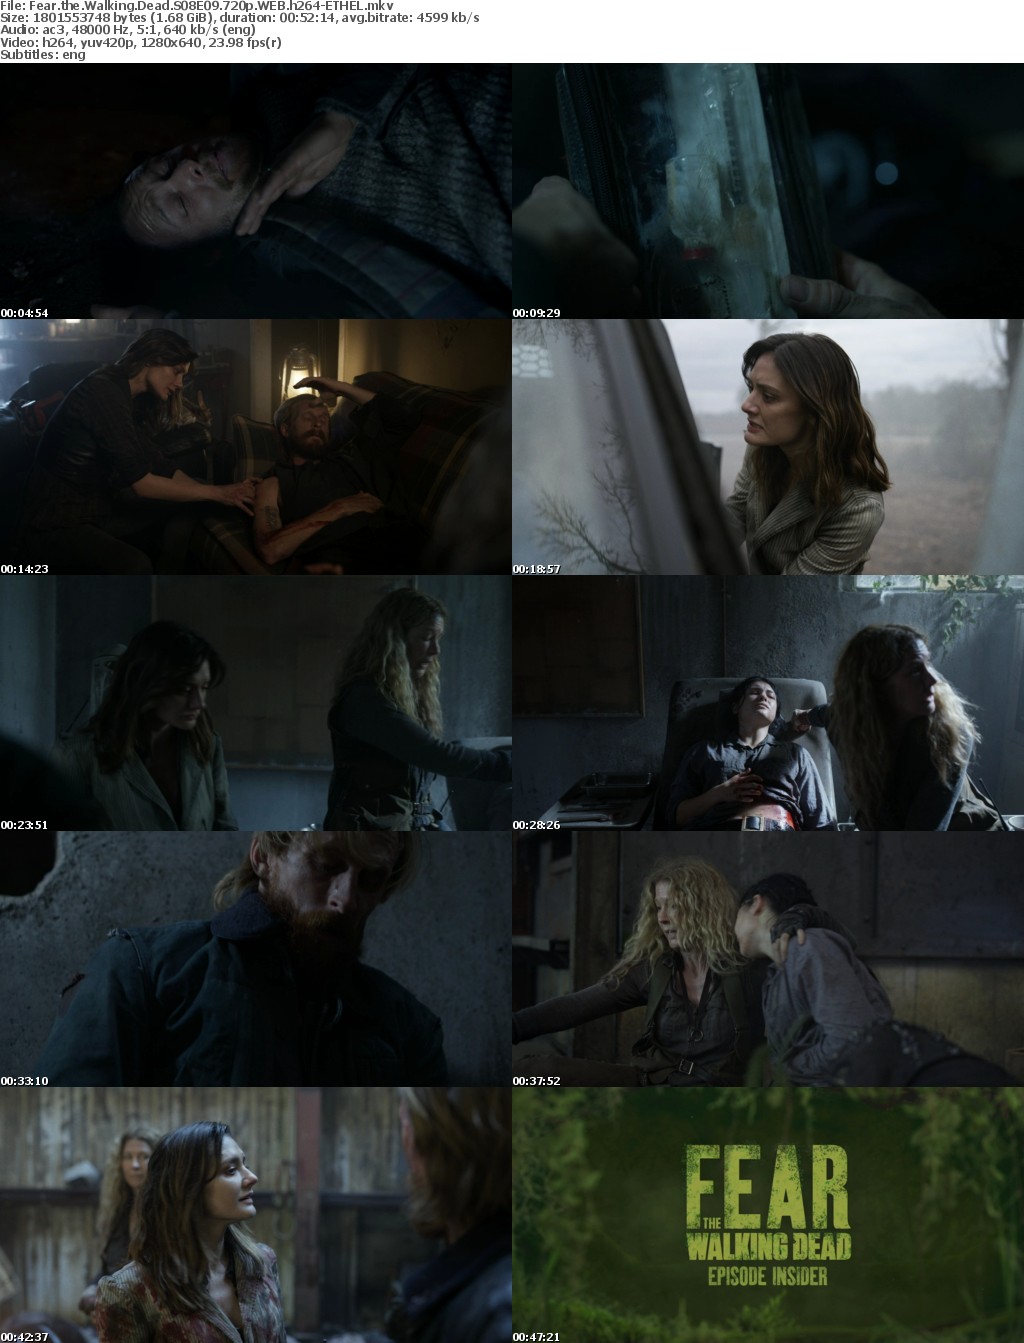 Fear the Walking Dead S08E09 720p WEB h264-ETHEL